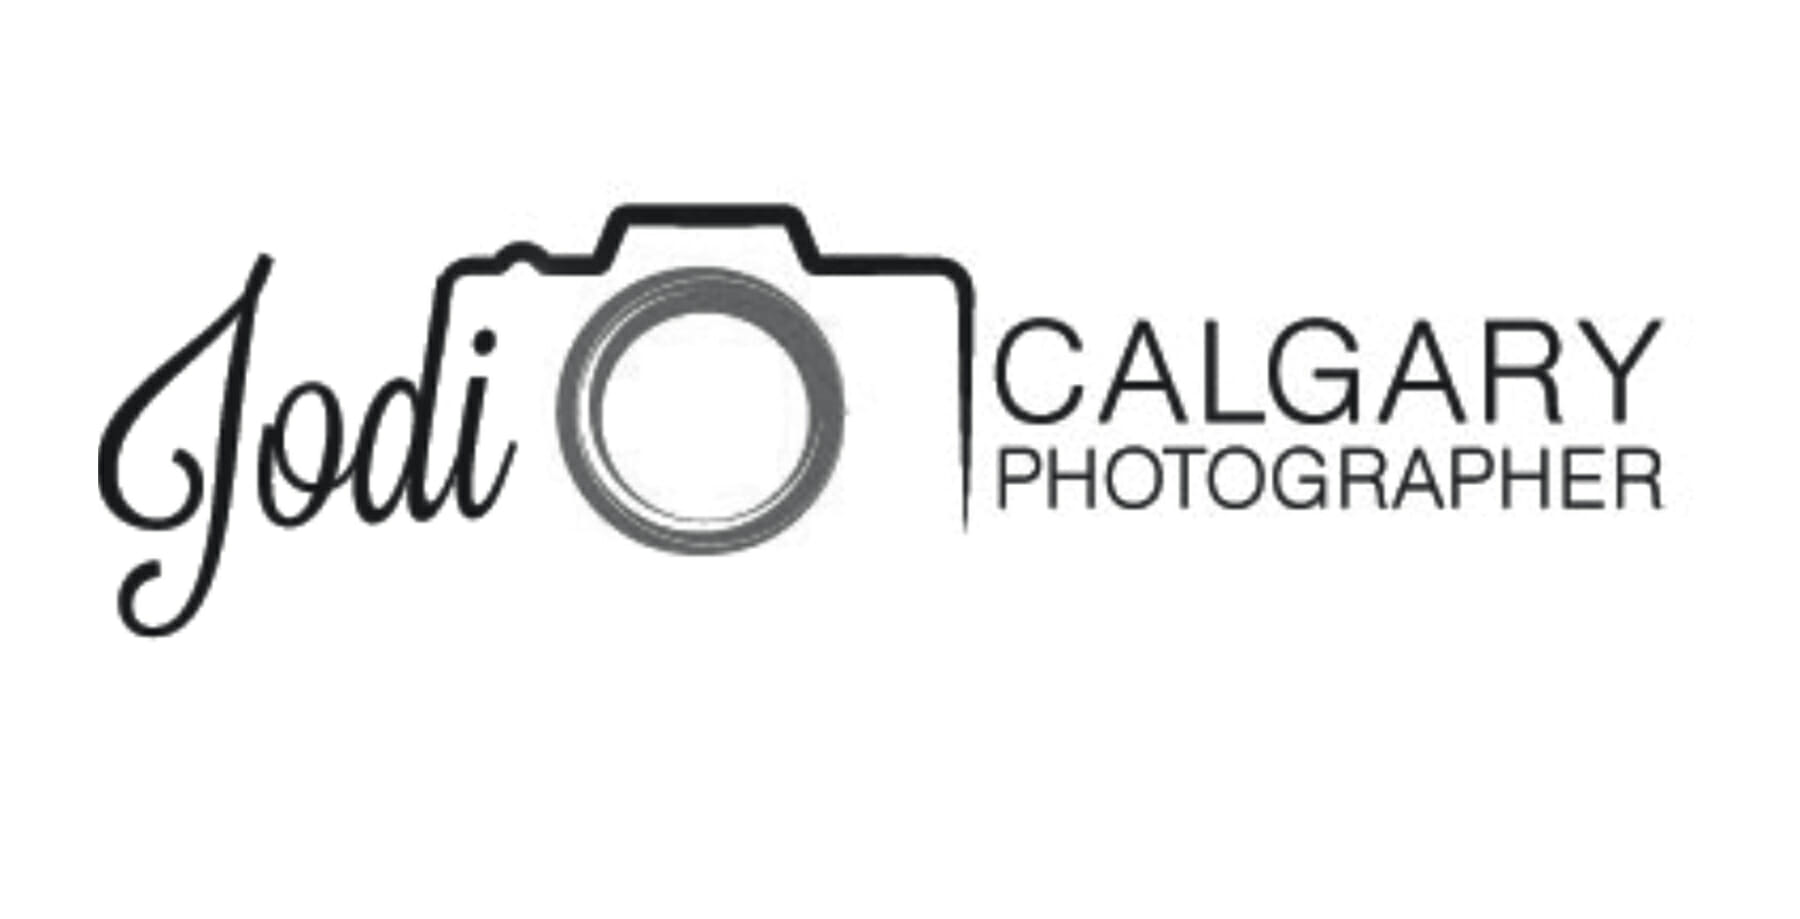 Looking for calgary photographers in Calgary